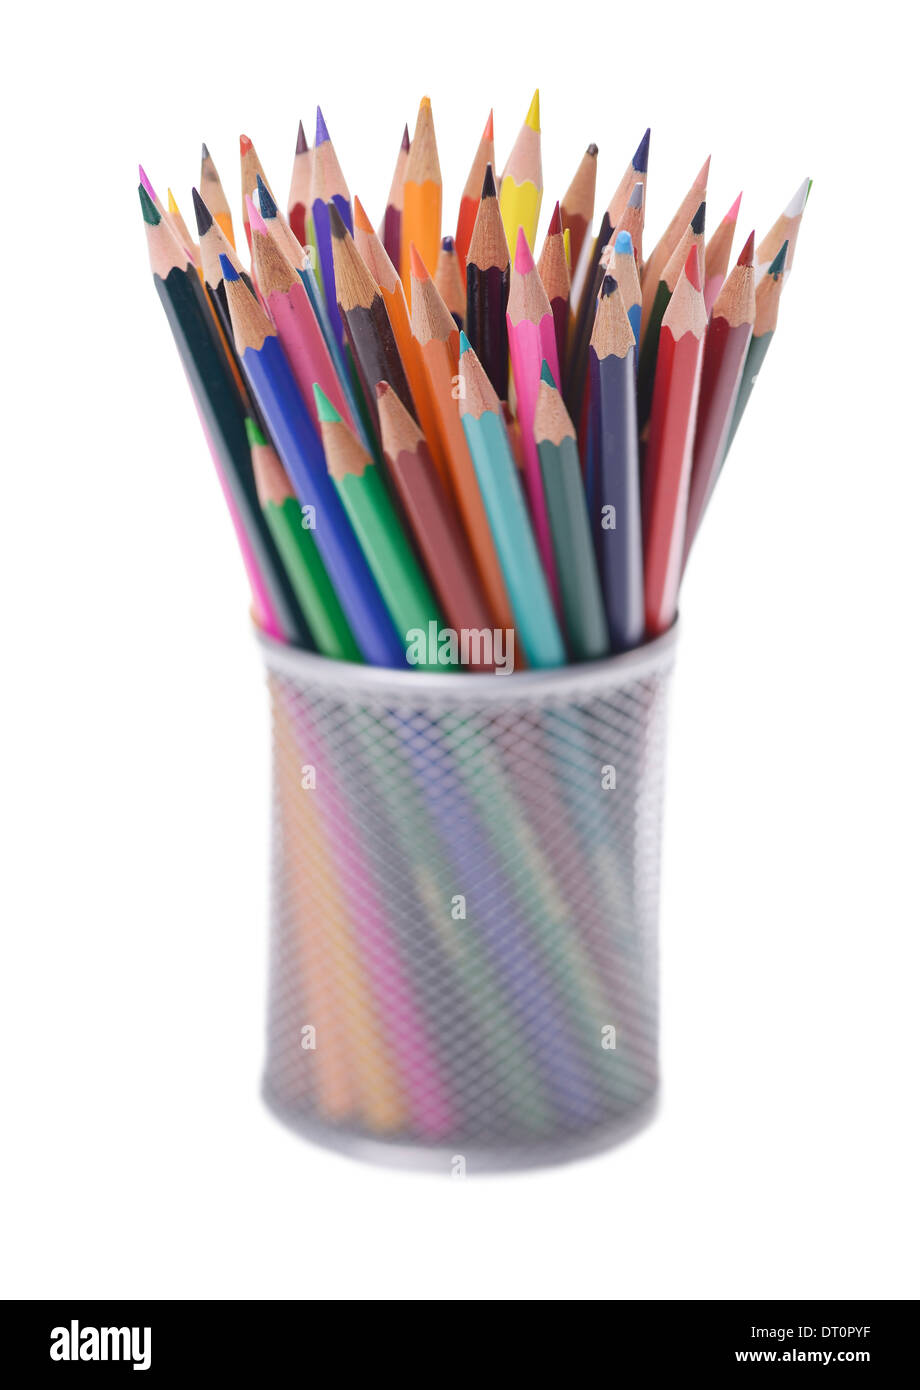 Office desk pencil pot full of coloured pencils Stock Photo